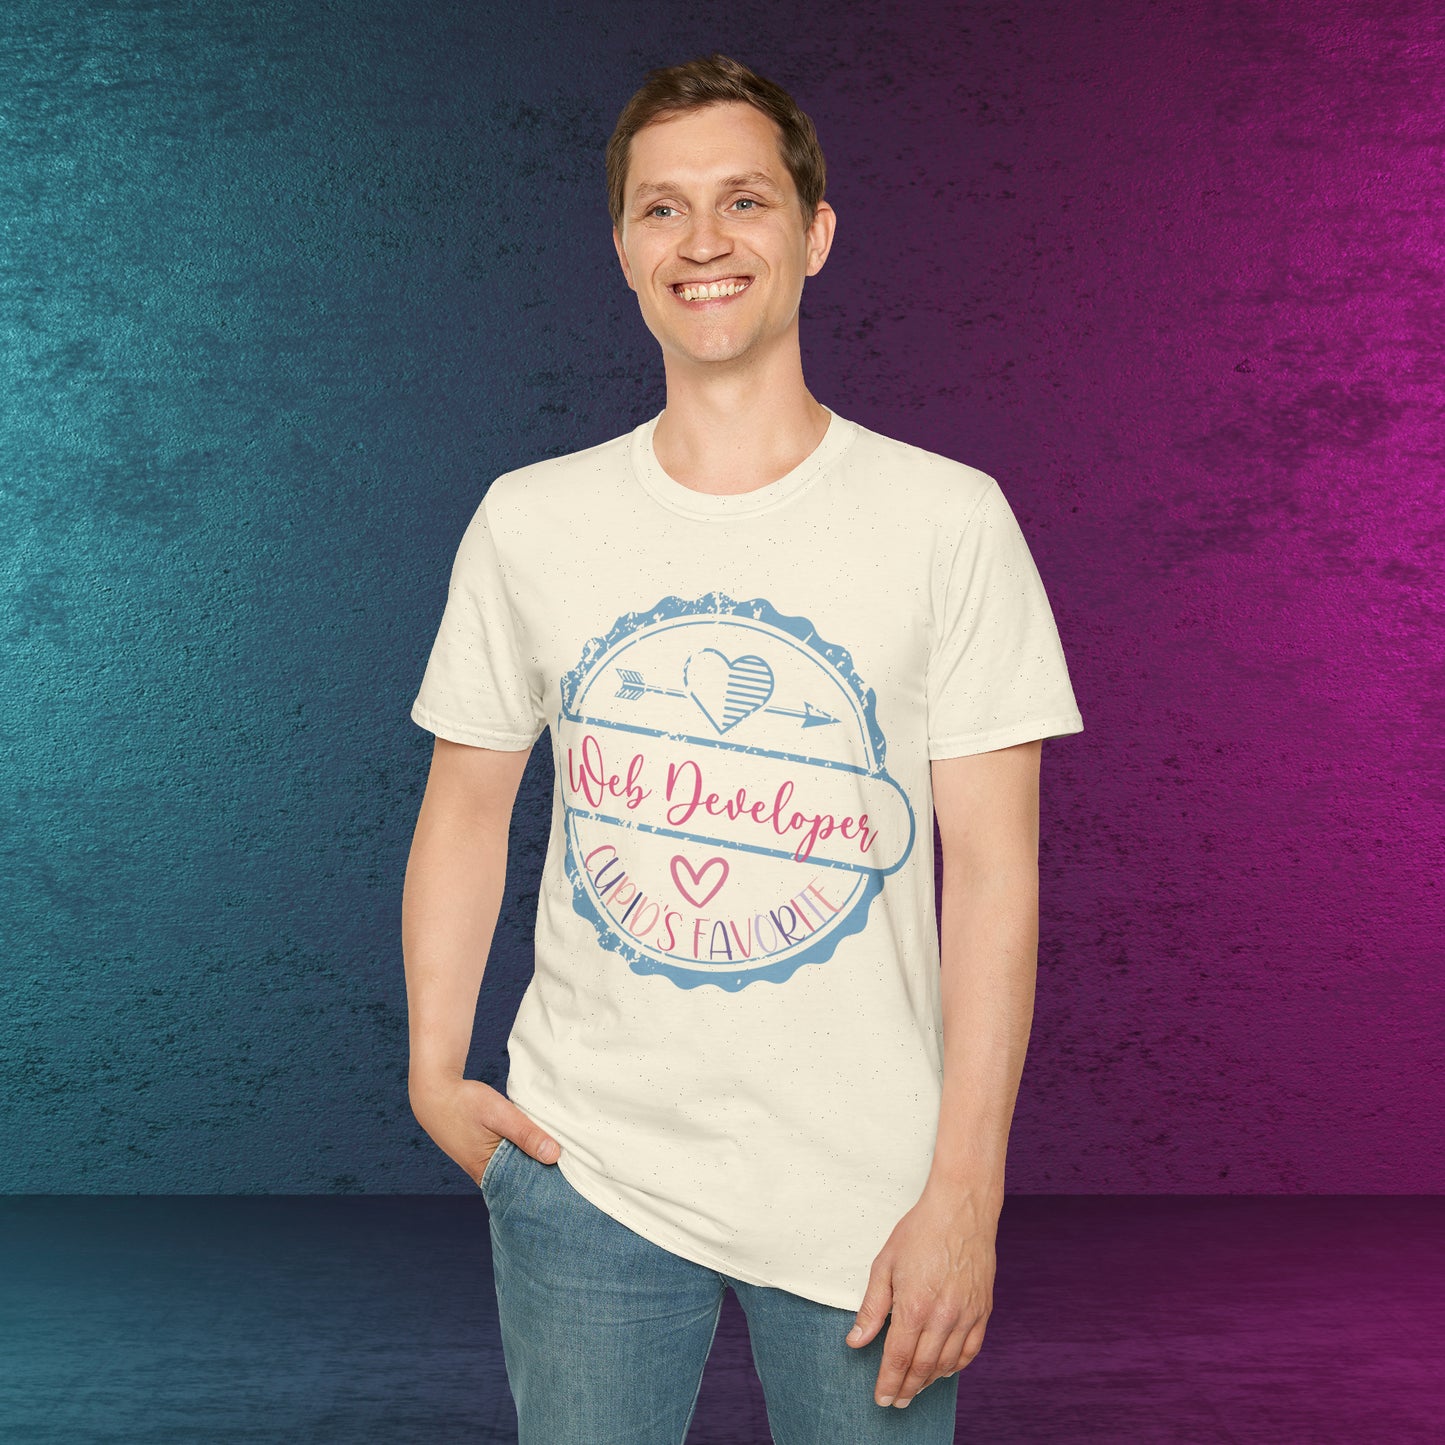 Cupid's Favorite-Web Developer Not Aggressive. POWERFUL™️ Not Aggressive. POWERFUL™️ Unisex Softstyle T-Shirt Eurofit